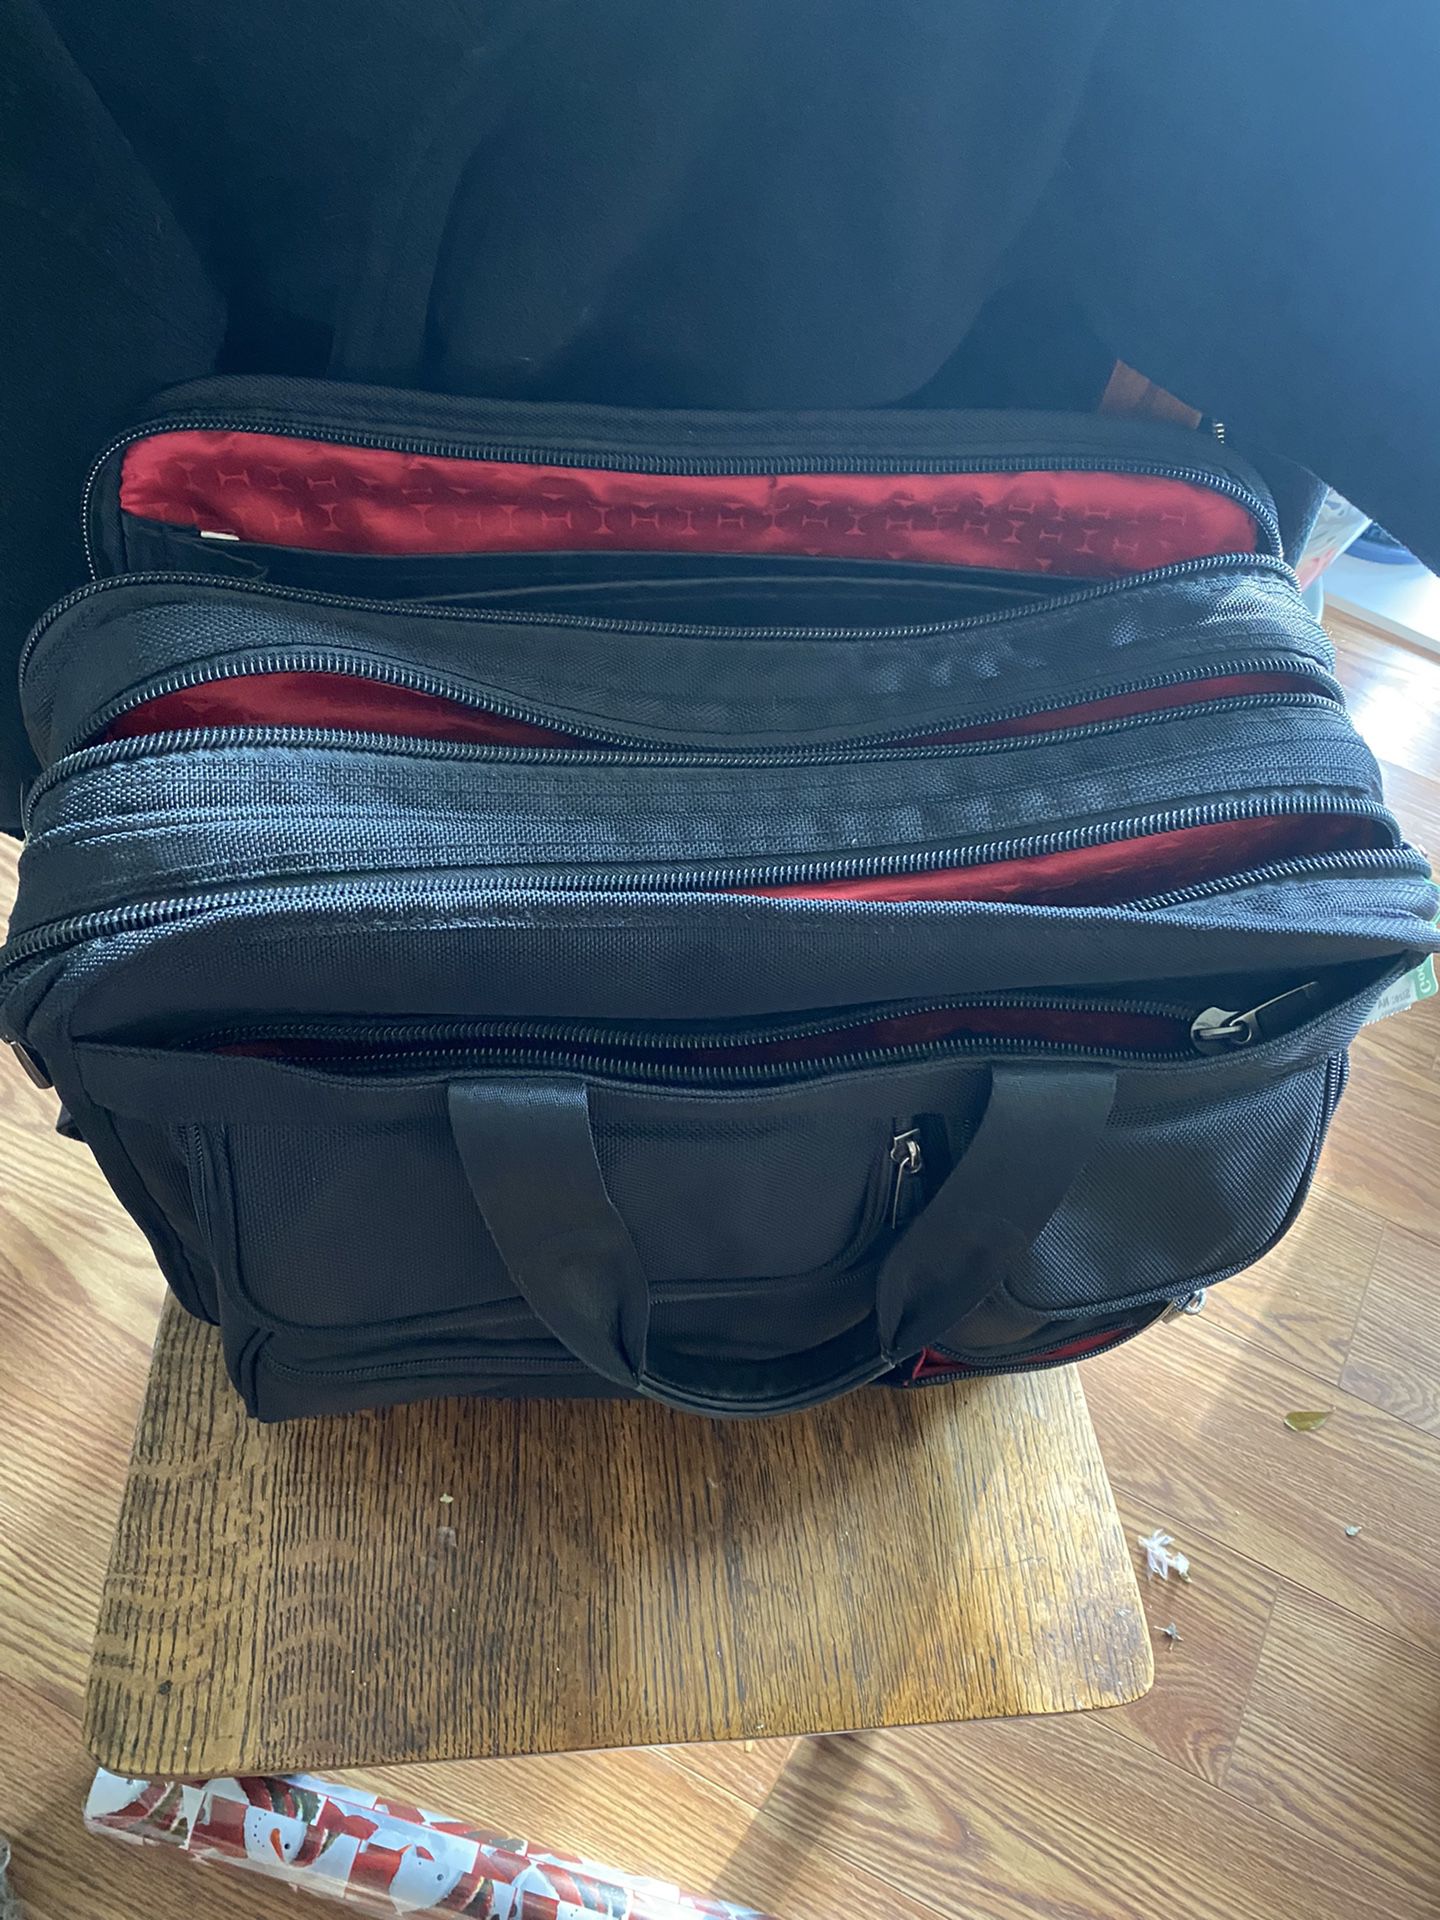 Laptop Backpack